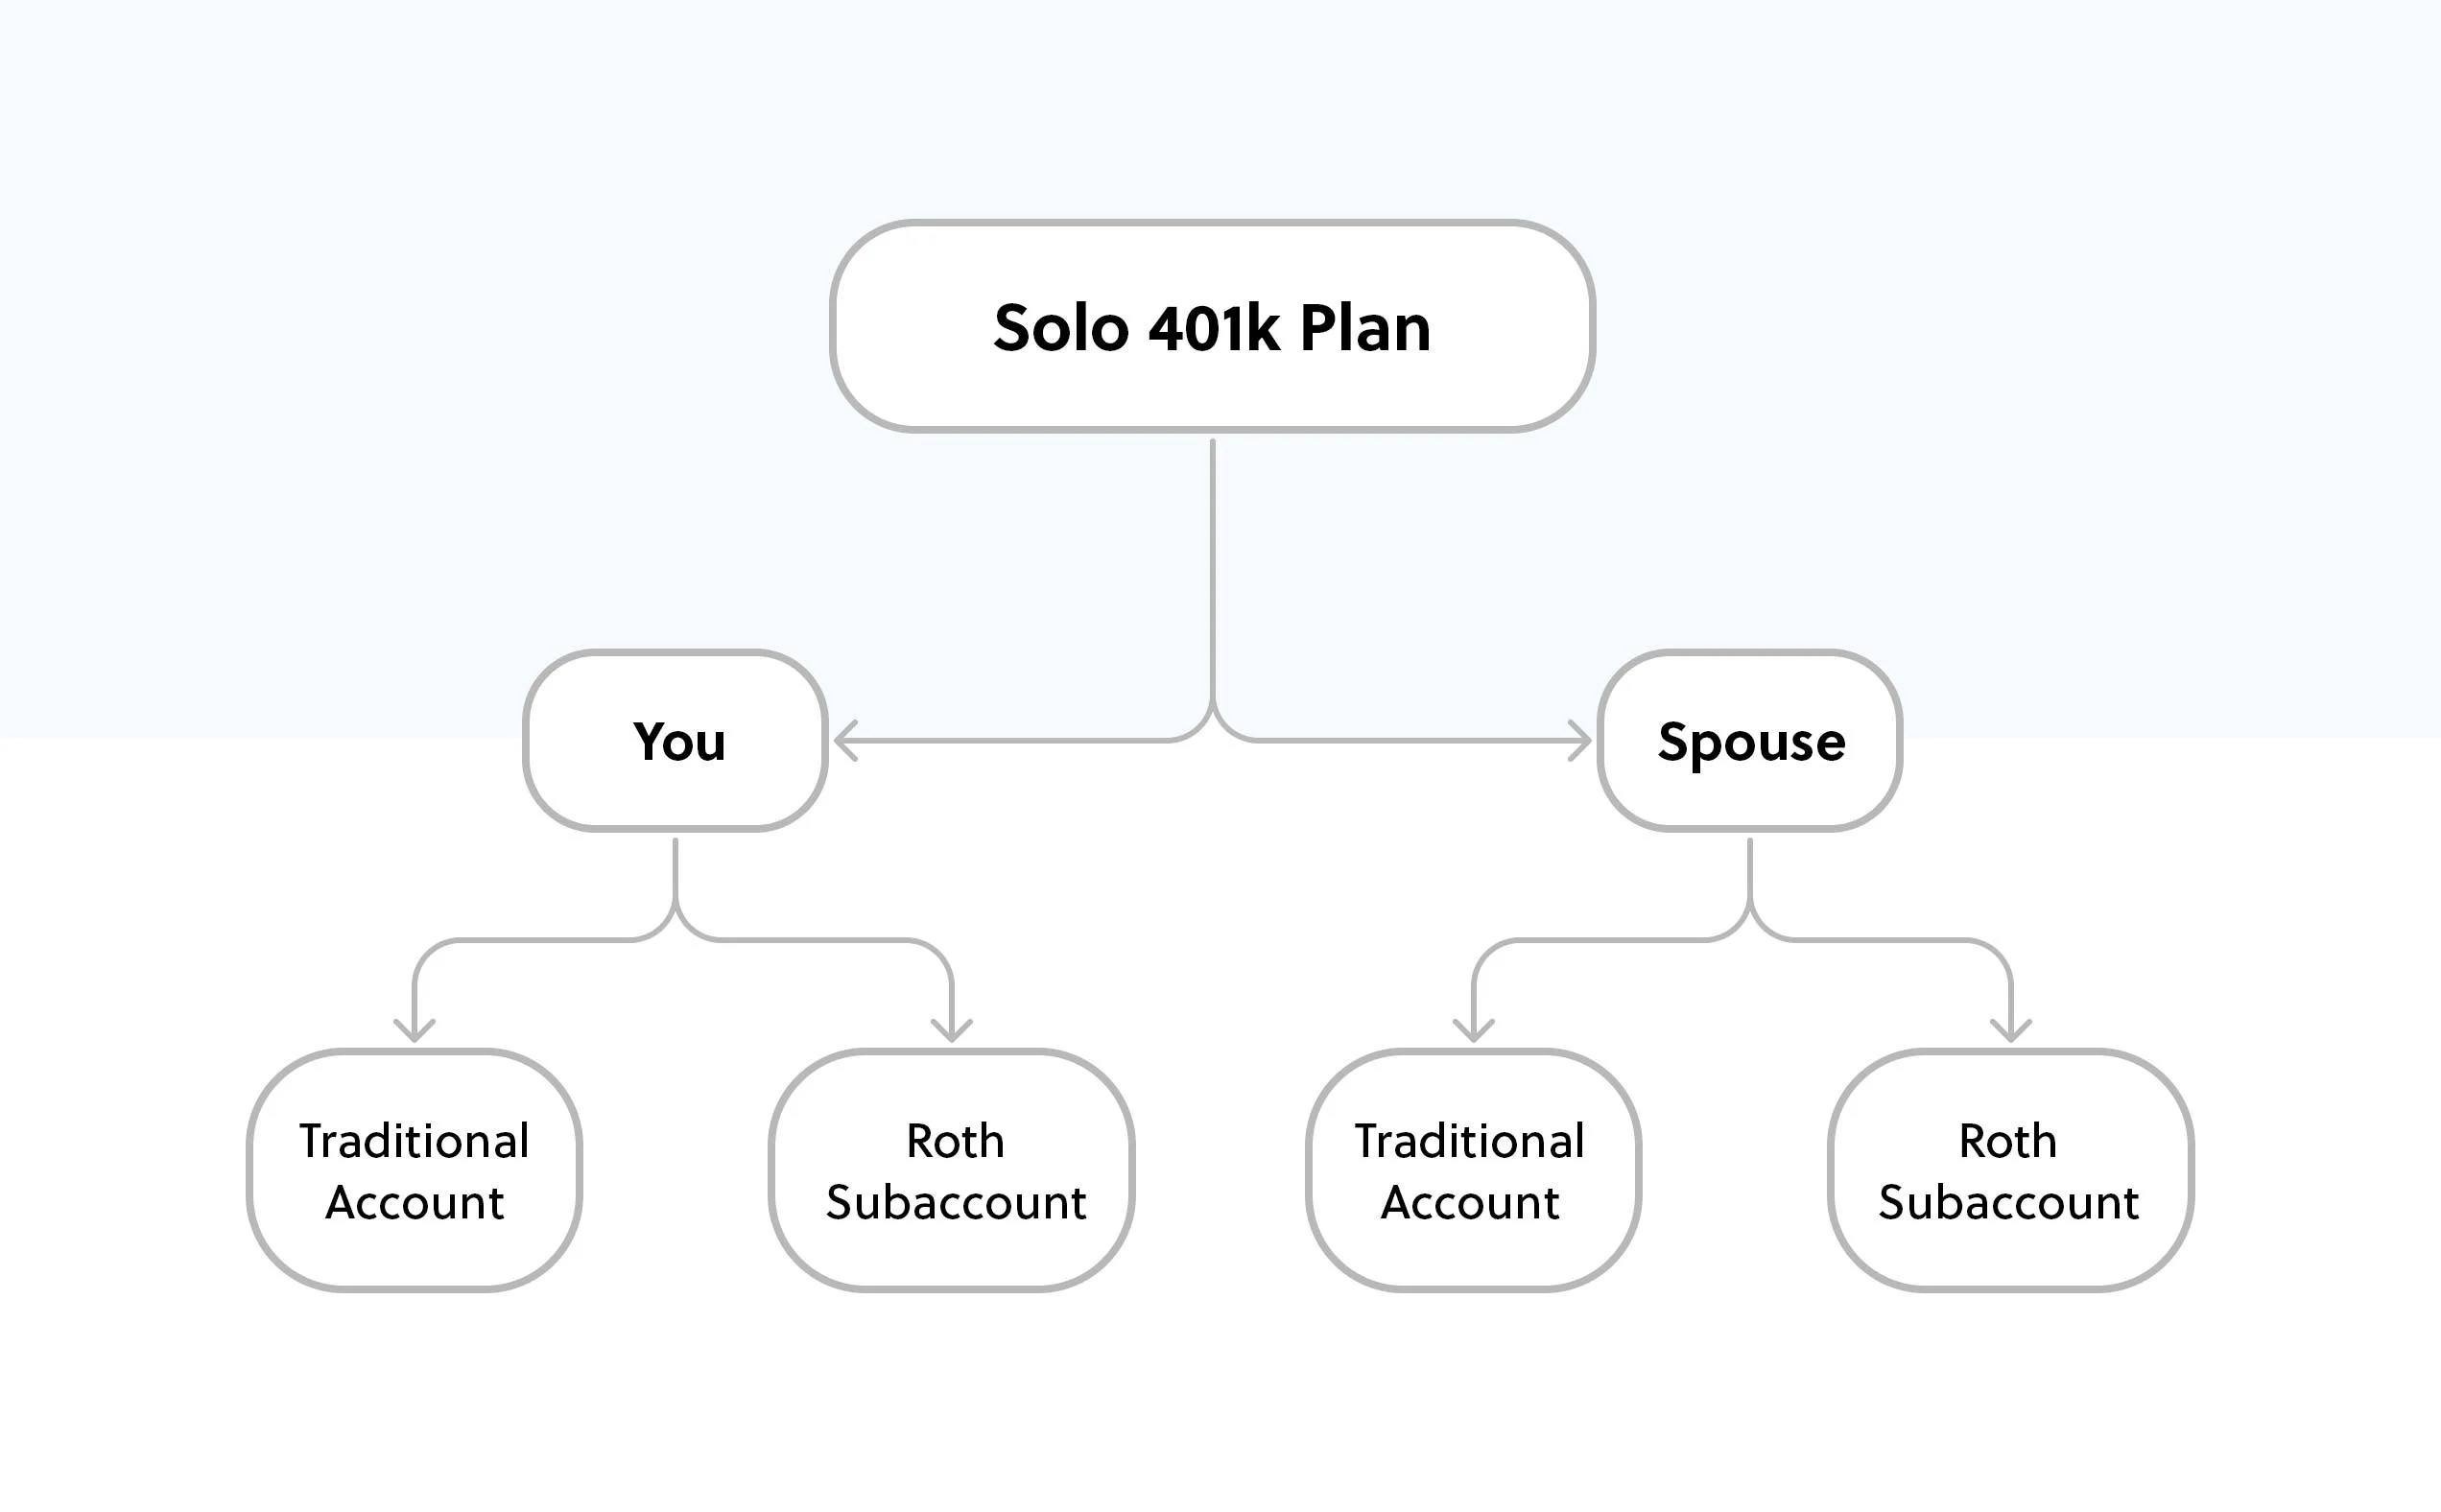 Free Spouse Account Solo 401k